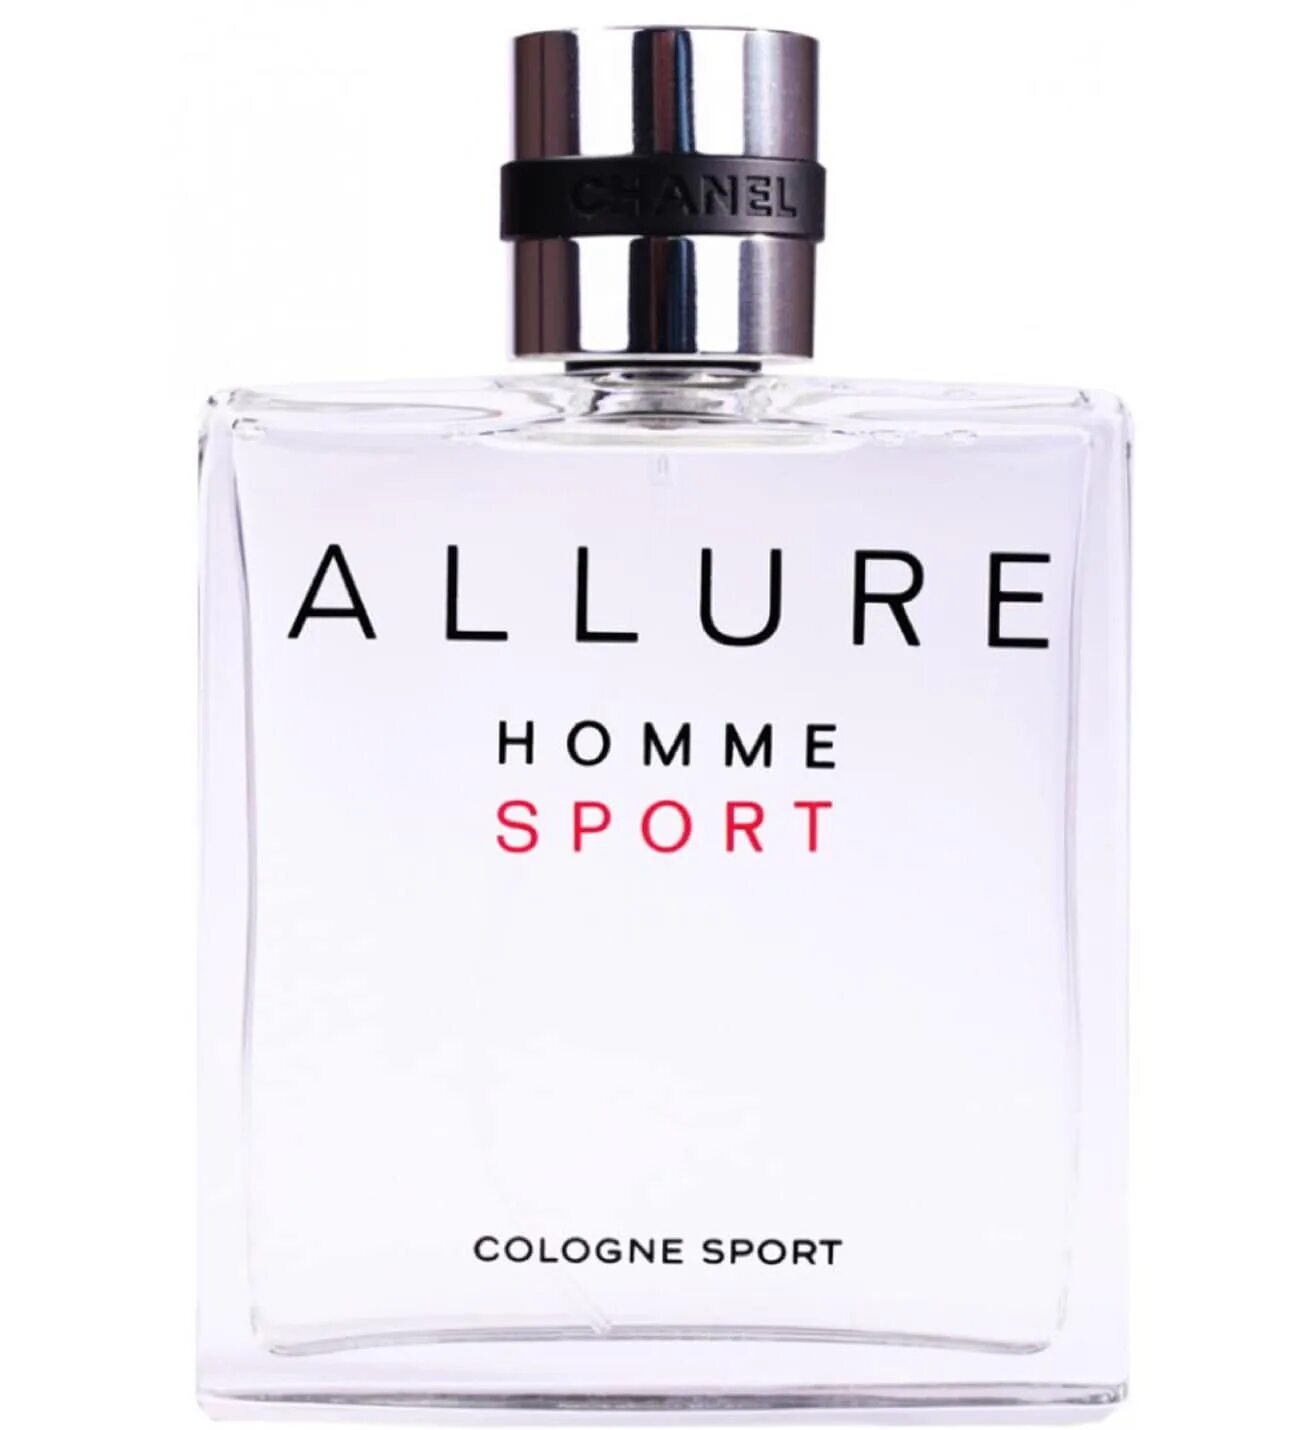 Chanel allure sport cologne. Chanel Allure homme Sport Cologne. Chanel homme Sport Cologne. Chanel Allure homme Sport. Шанель хом спорт мужские.